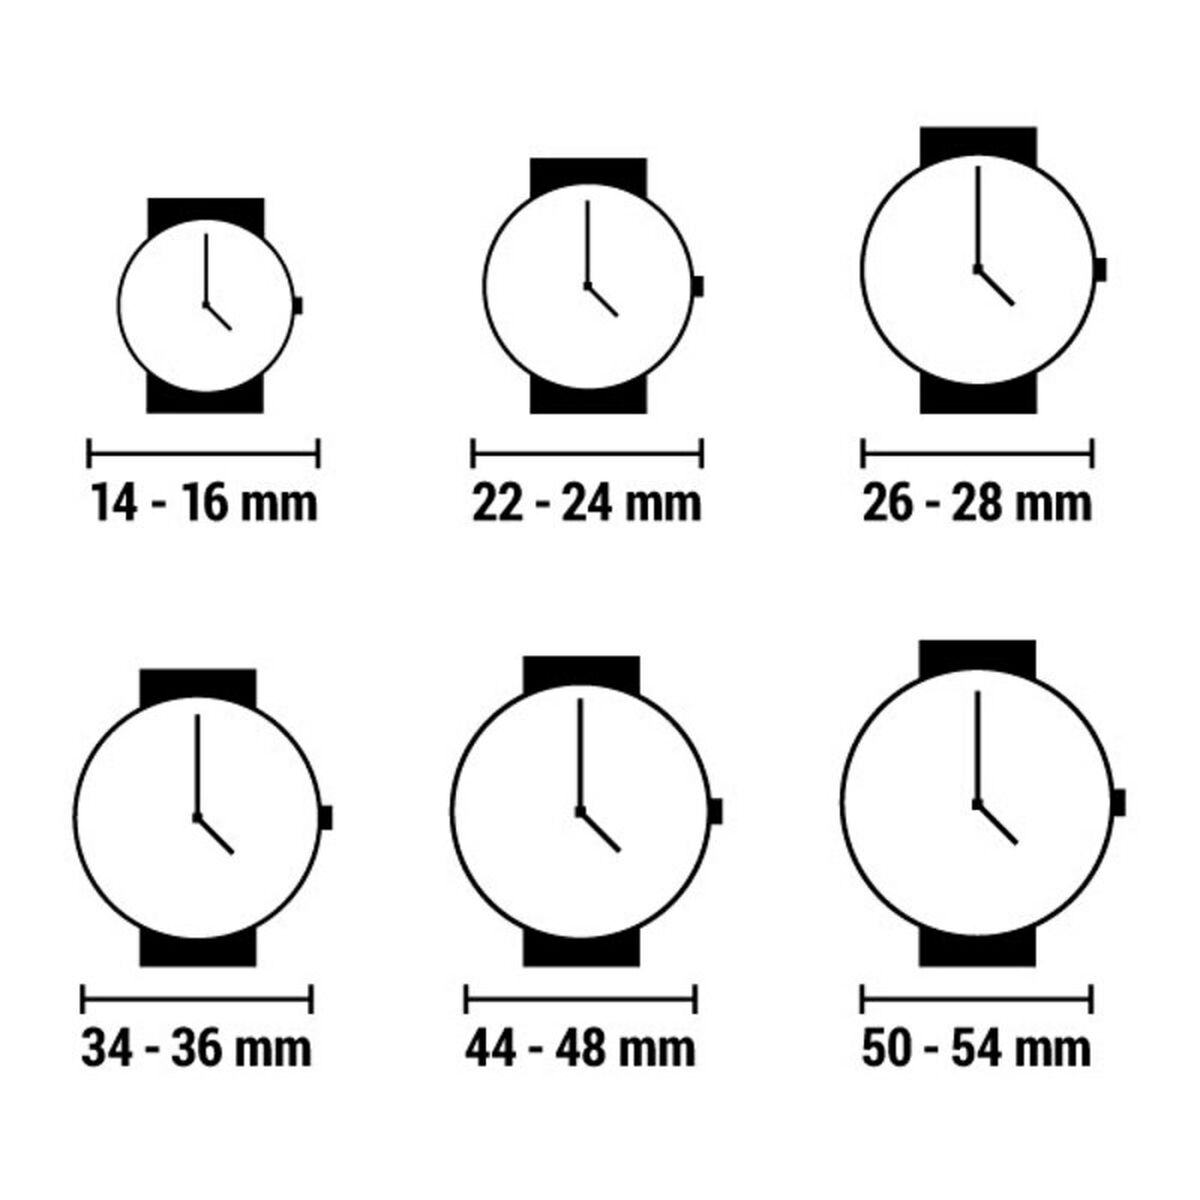 Horloge Heren Nixon A4052548 (Ø 42 mm)